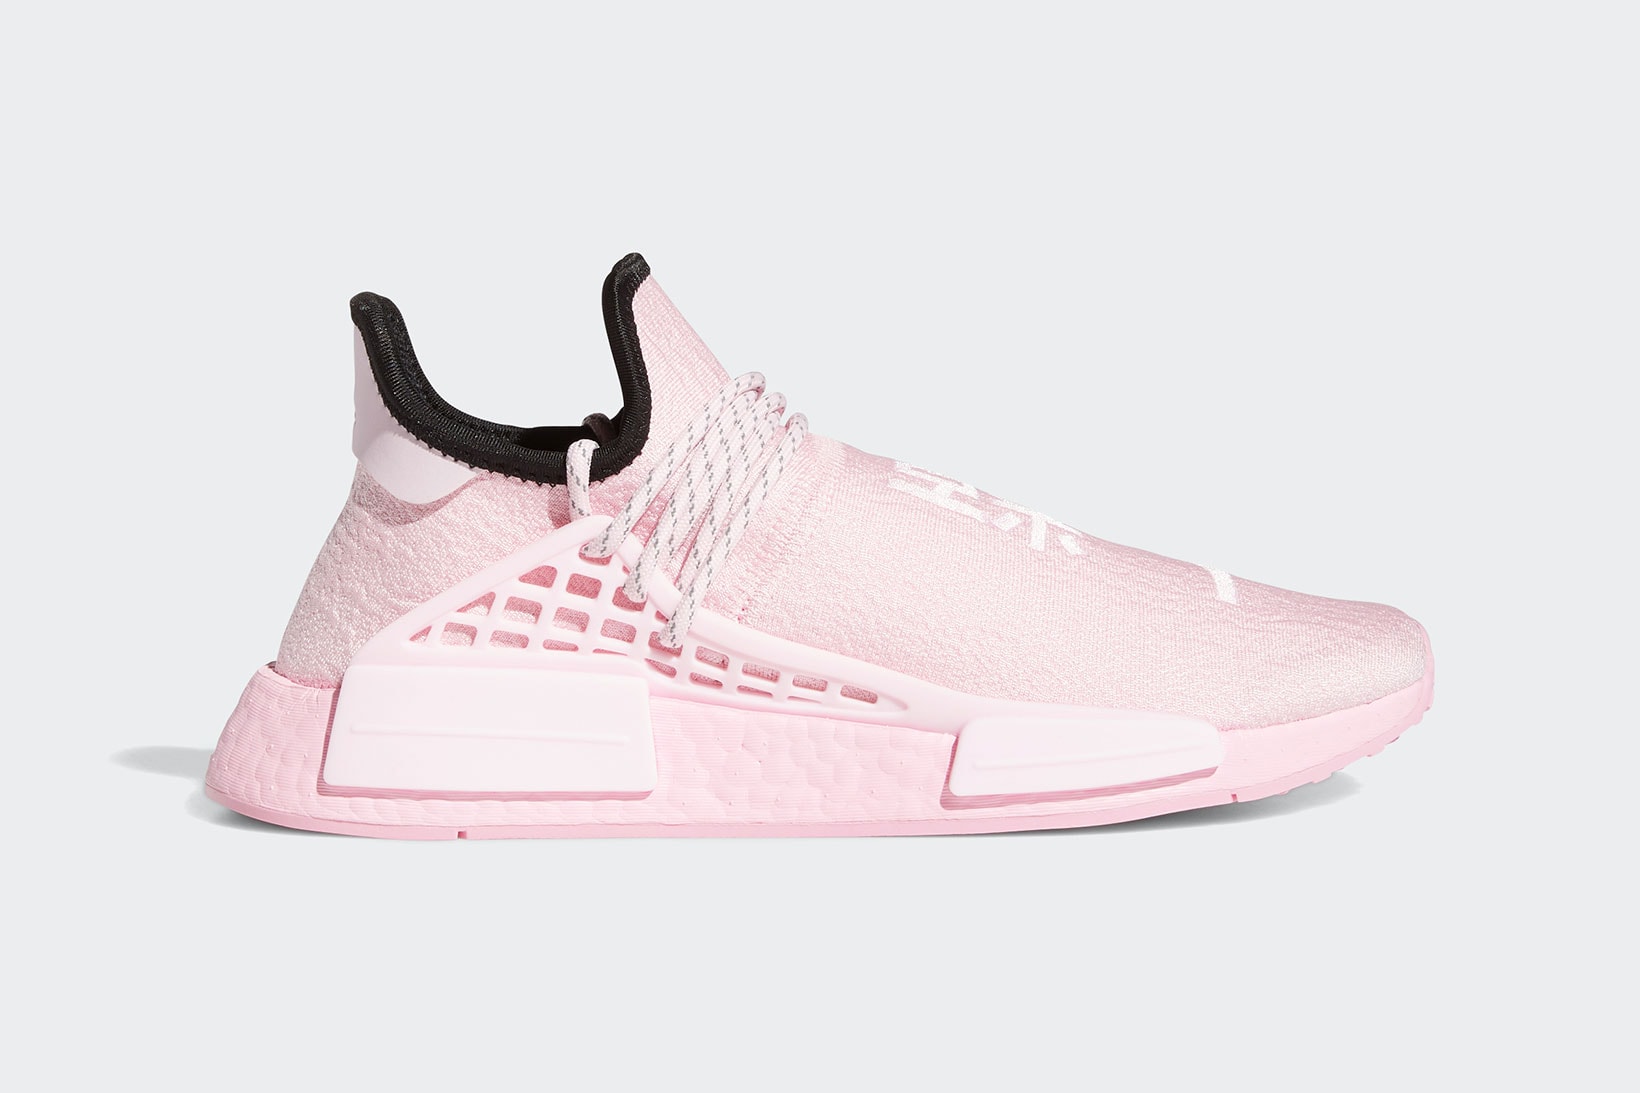 pharrell williams adidas originals hu nmd collaboration pink sneakers footwear shoes kicks sneakerhead lateral